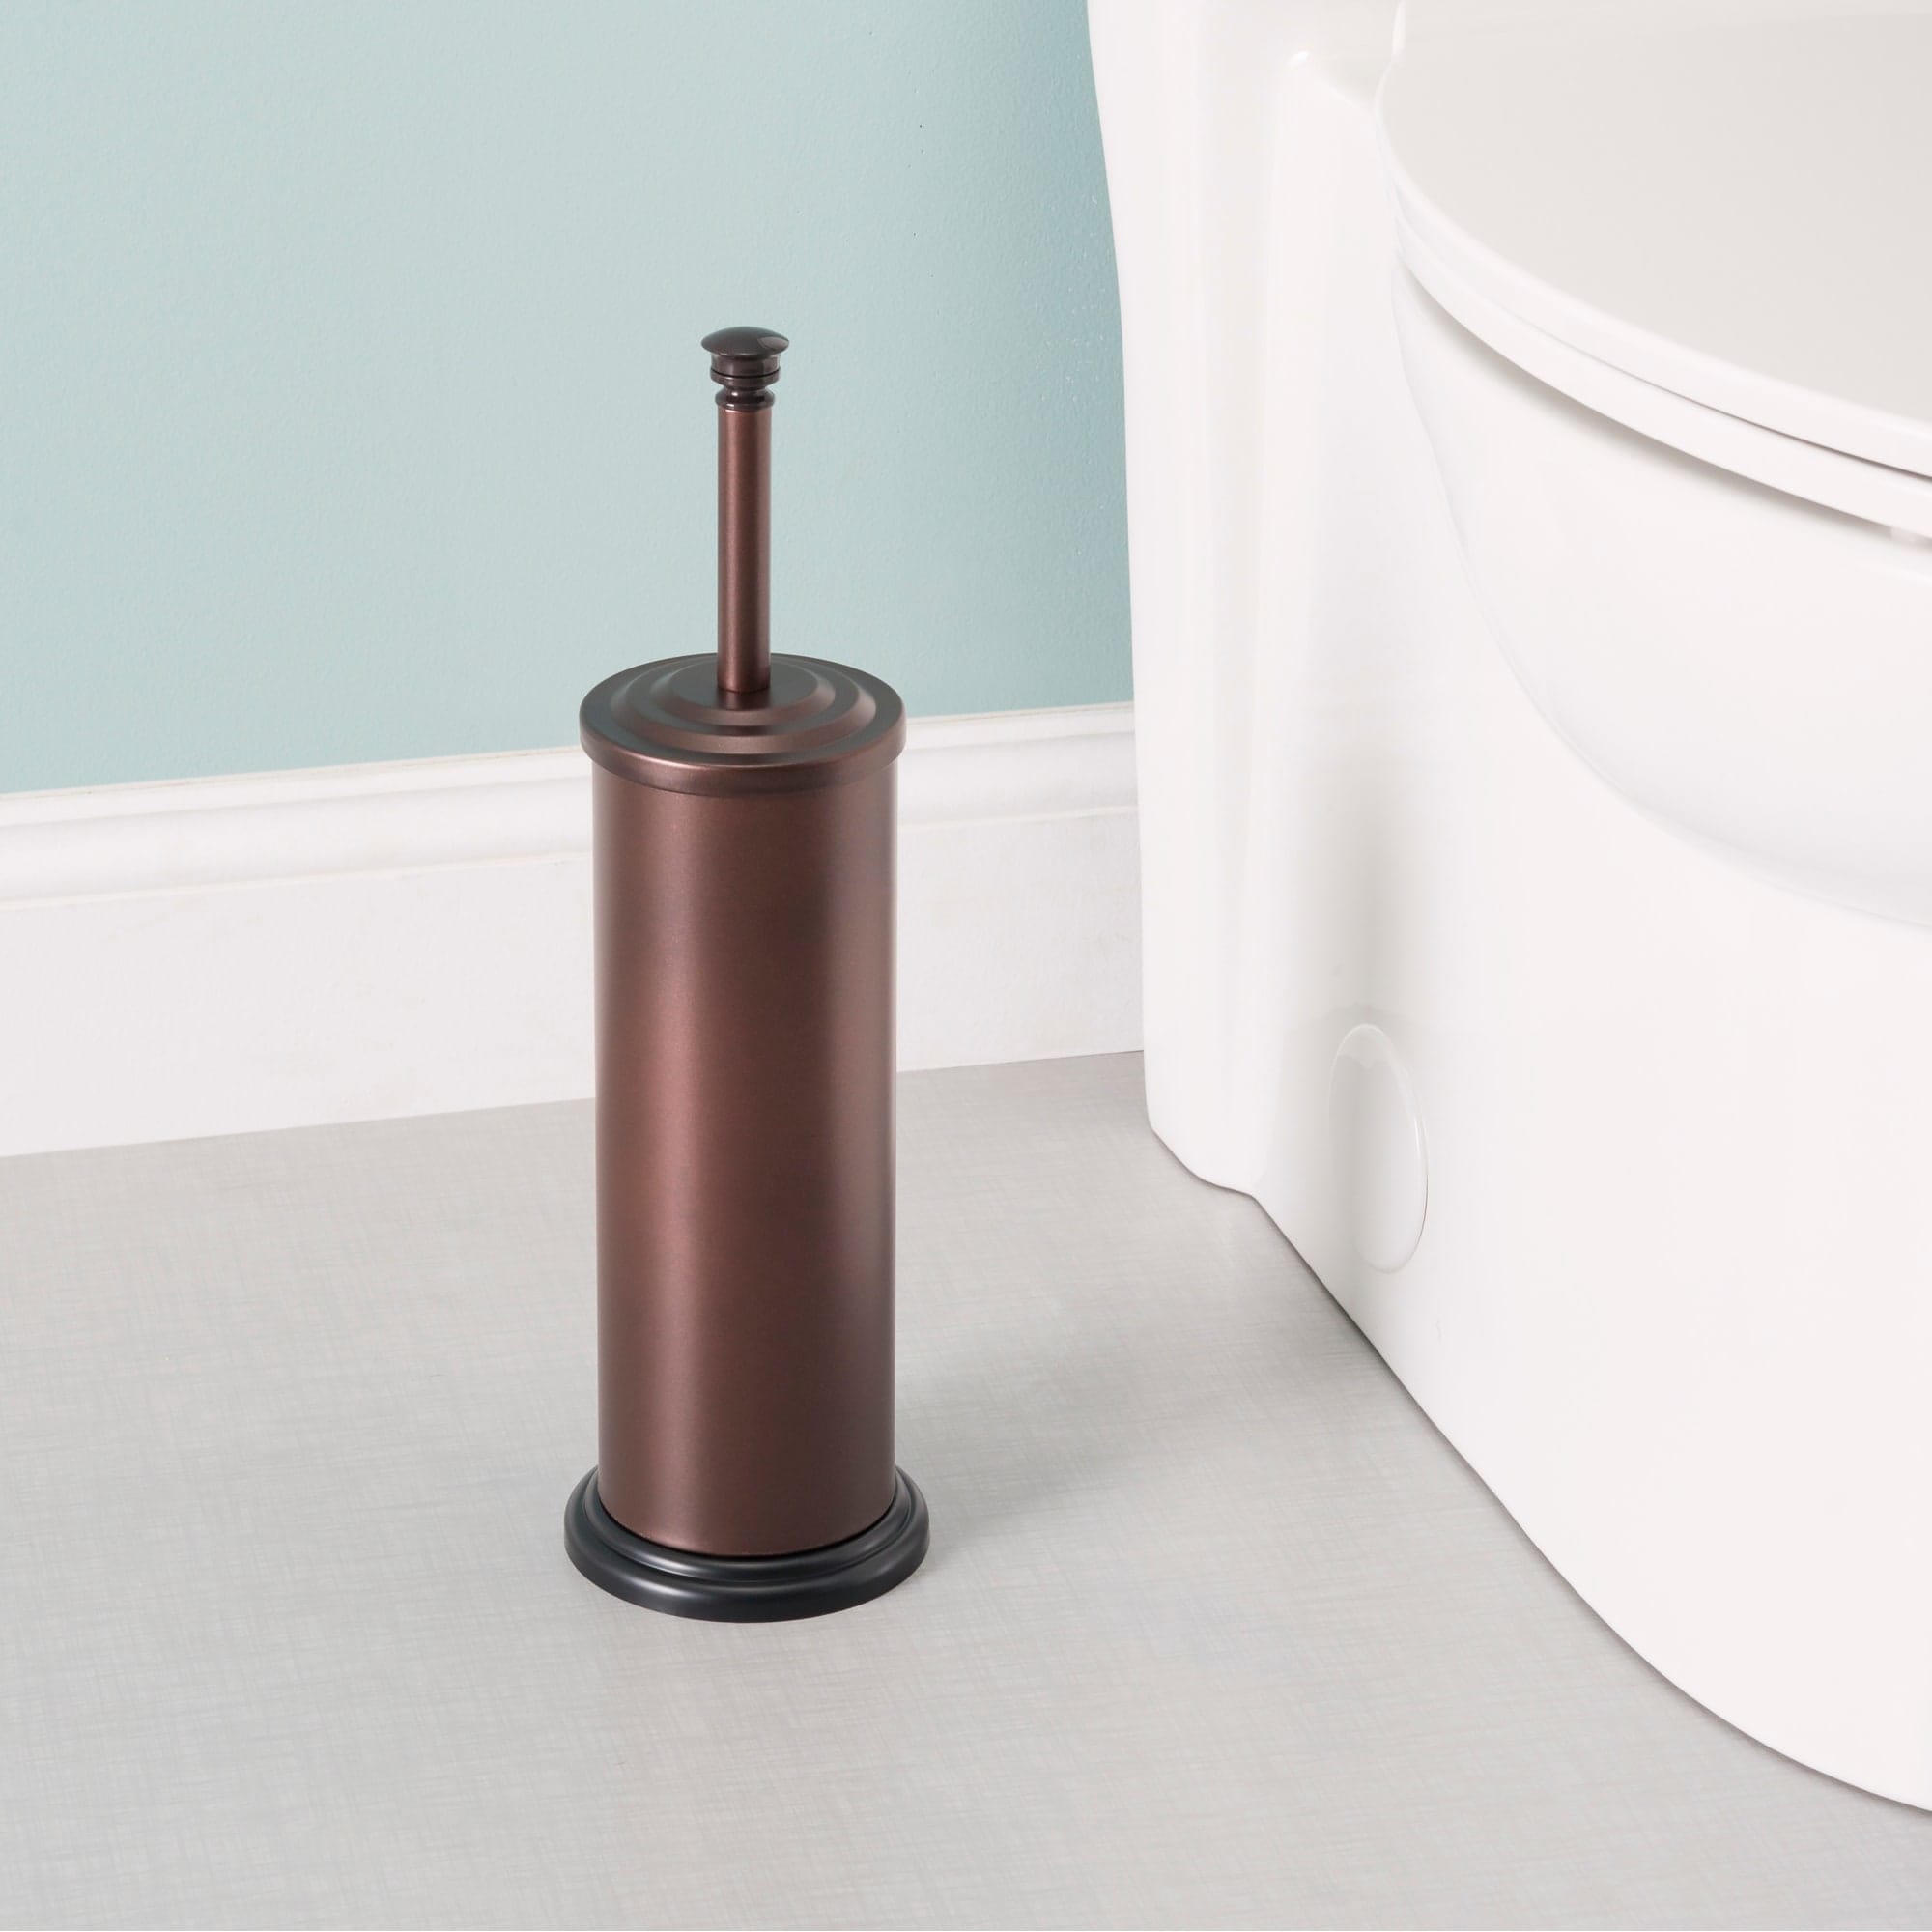 Home Basics Hideaway Tall Toilet Brush Holder with Steel Handled Brush, Bronze $6.00 EACH, CASE PACK OF 12